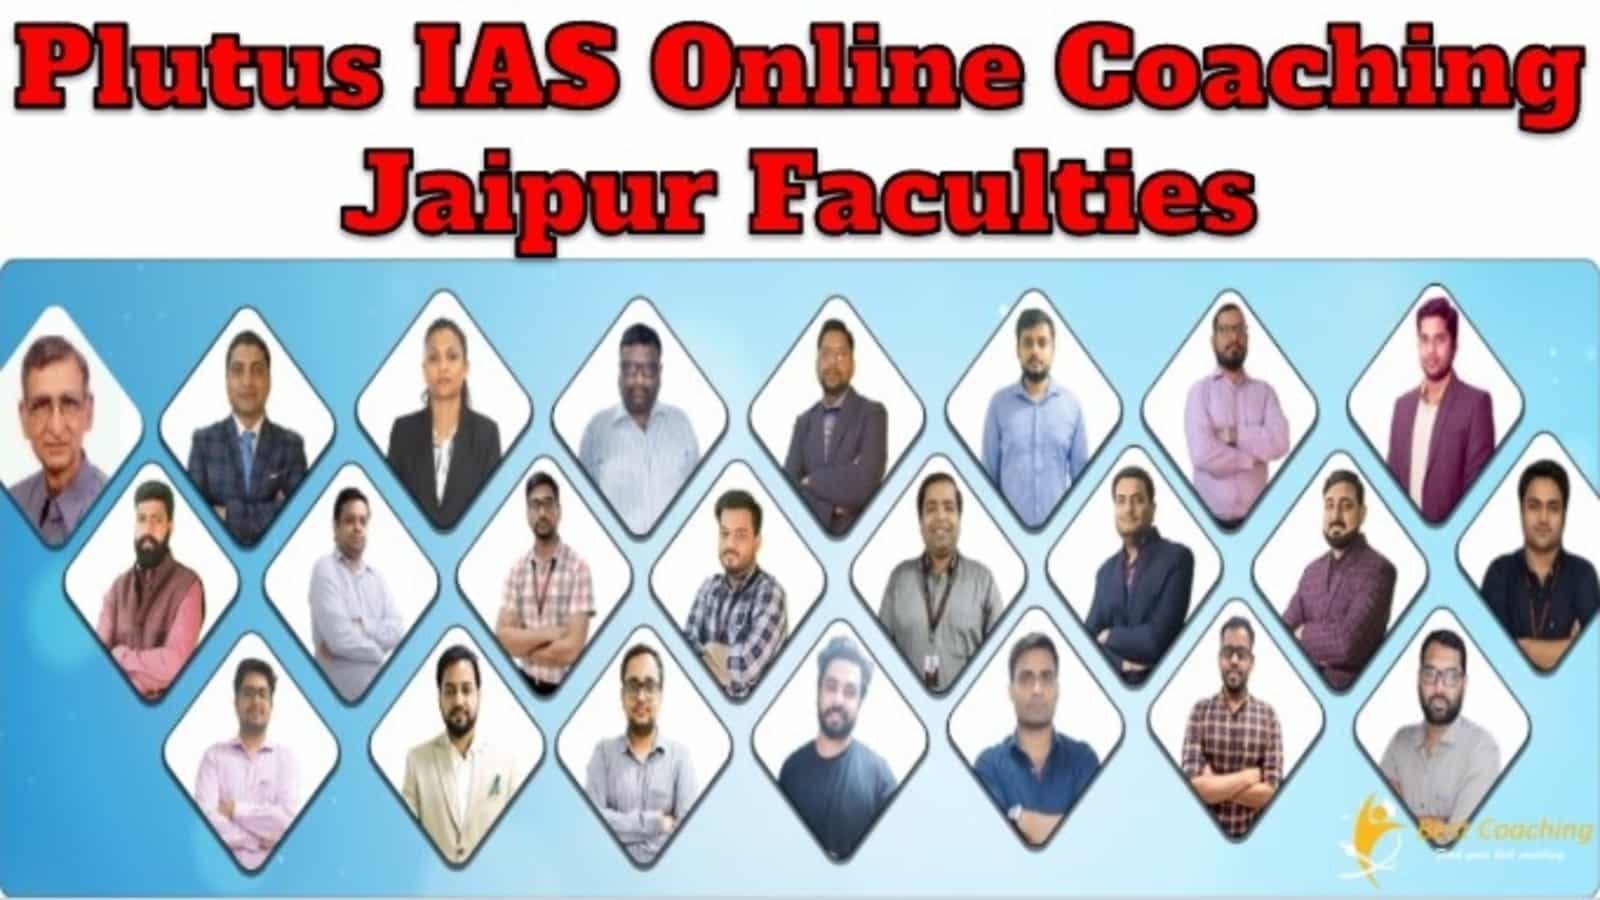 Plutus IAS Online Coaching Jaipur Faculties